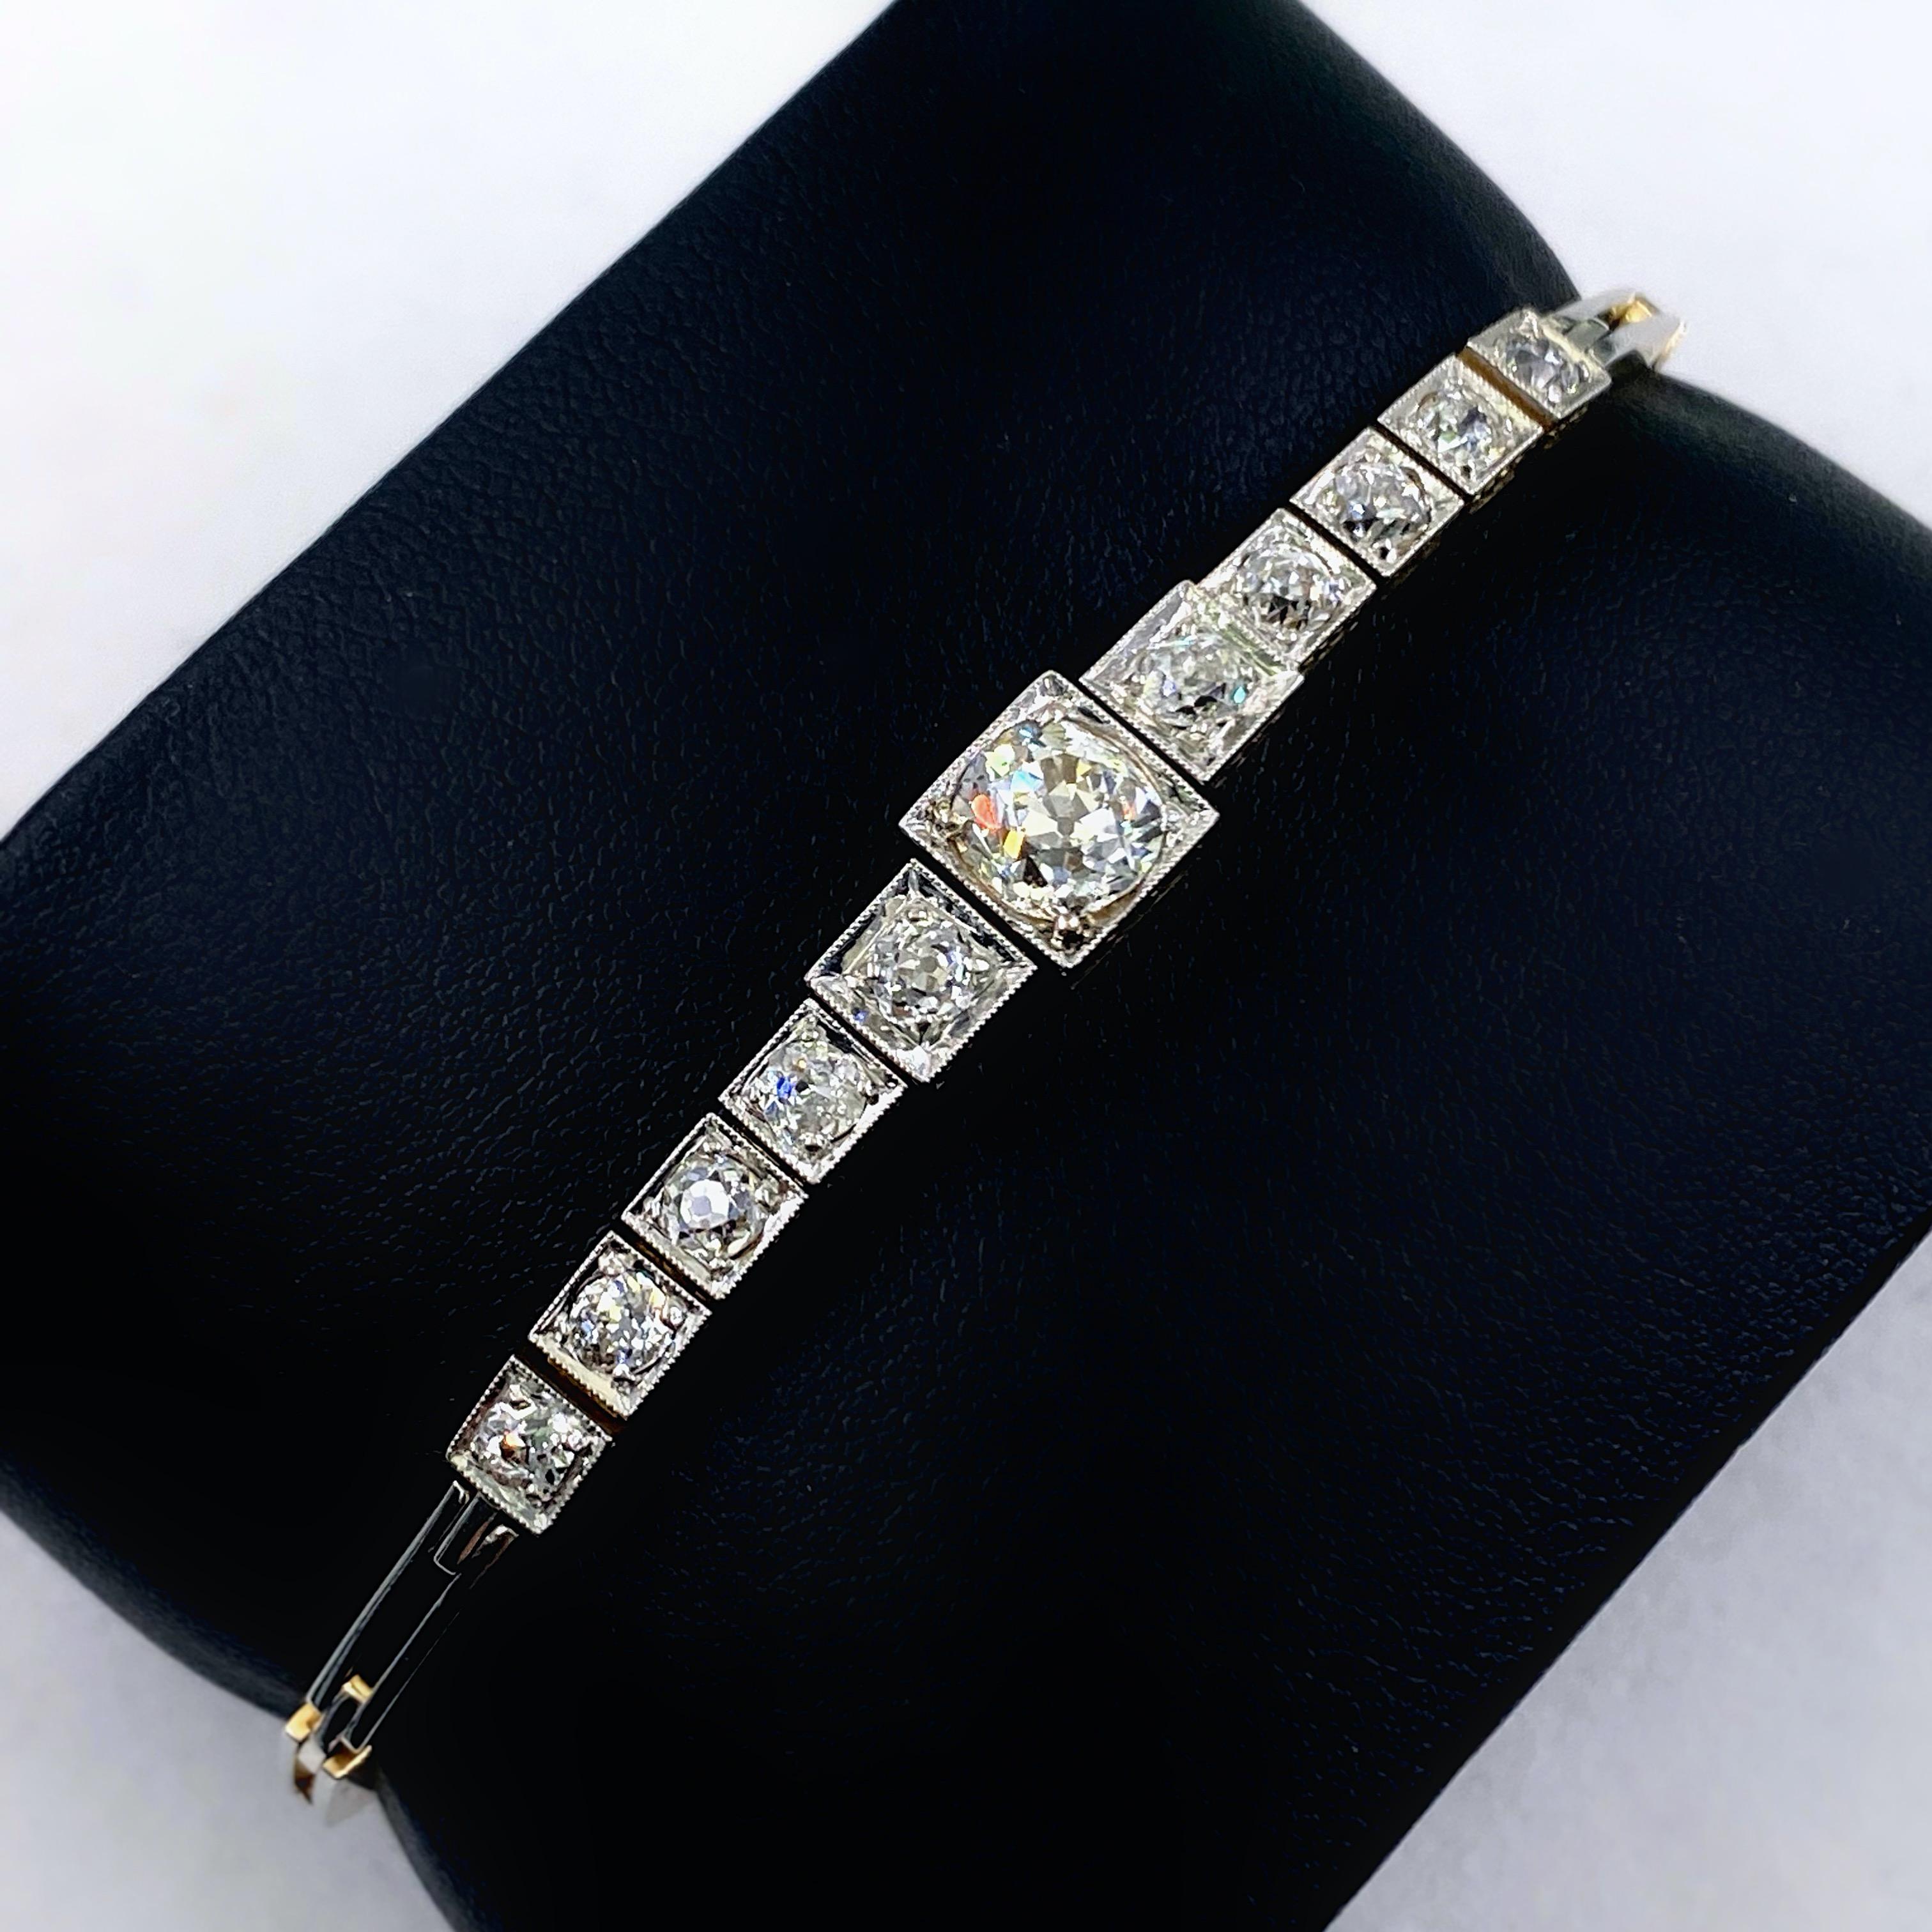 Antique Edwardian Old Mine Cut Diamond Bracelet
Style:  Link Bracelet
Metal:  148 kt White & Yellow Gold
Size / Measurements:  7 inches / 6.9 - 2.55 mm
TCW:  2.35 tcw
Diamonds:  11 Old Mine Cut Diamonds 
Color & Clarity:ting:  I - J / VS2 -